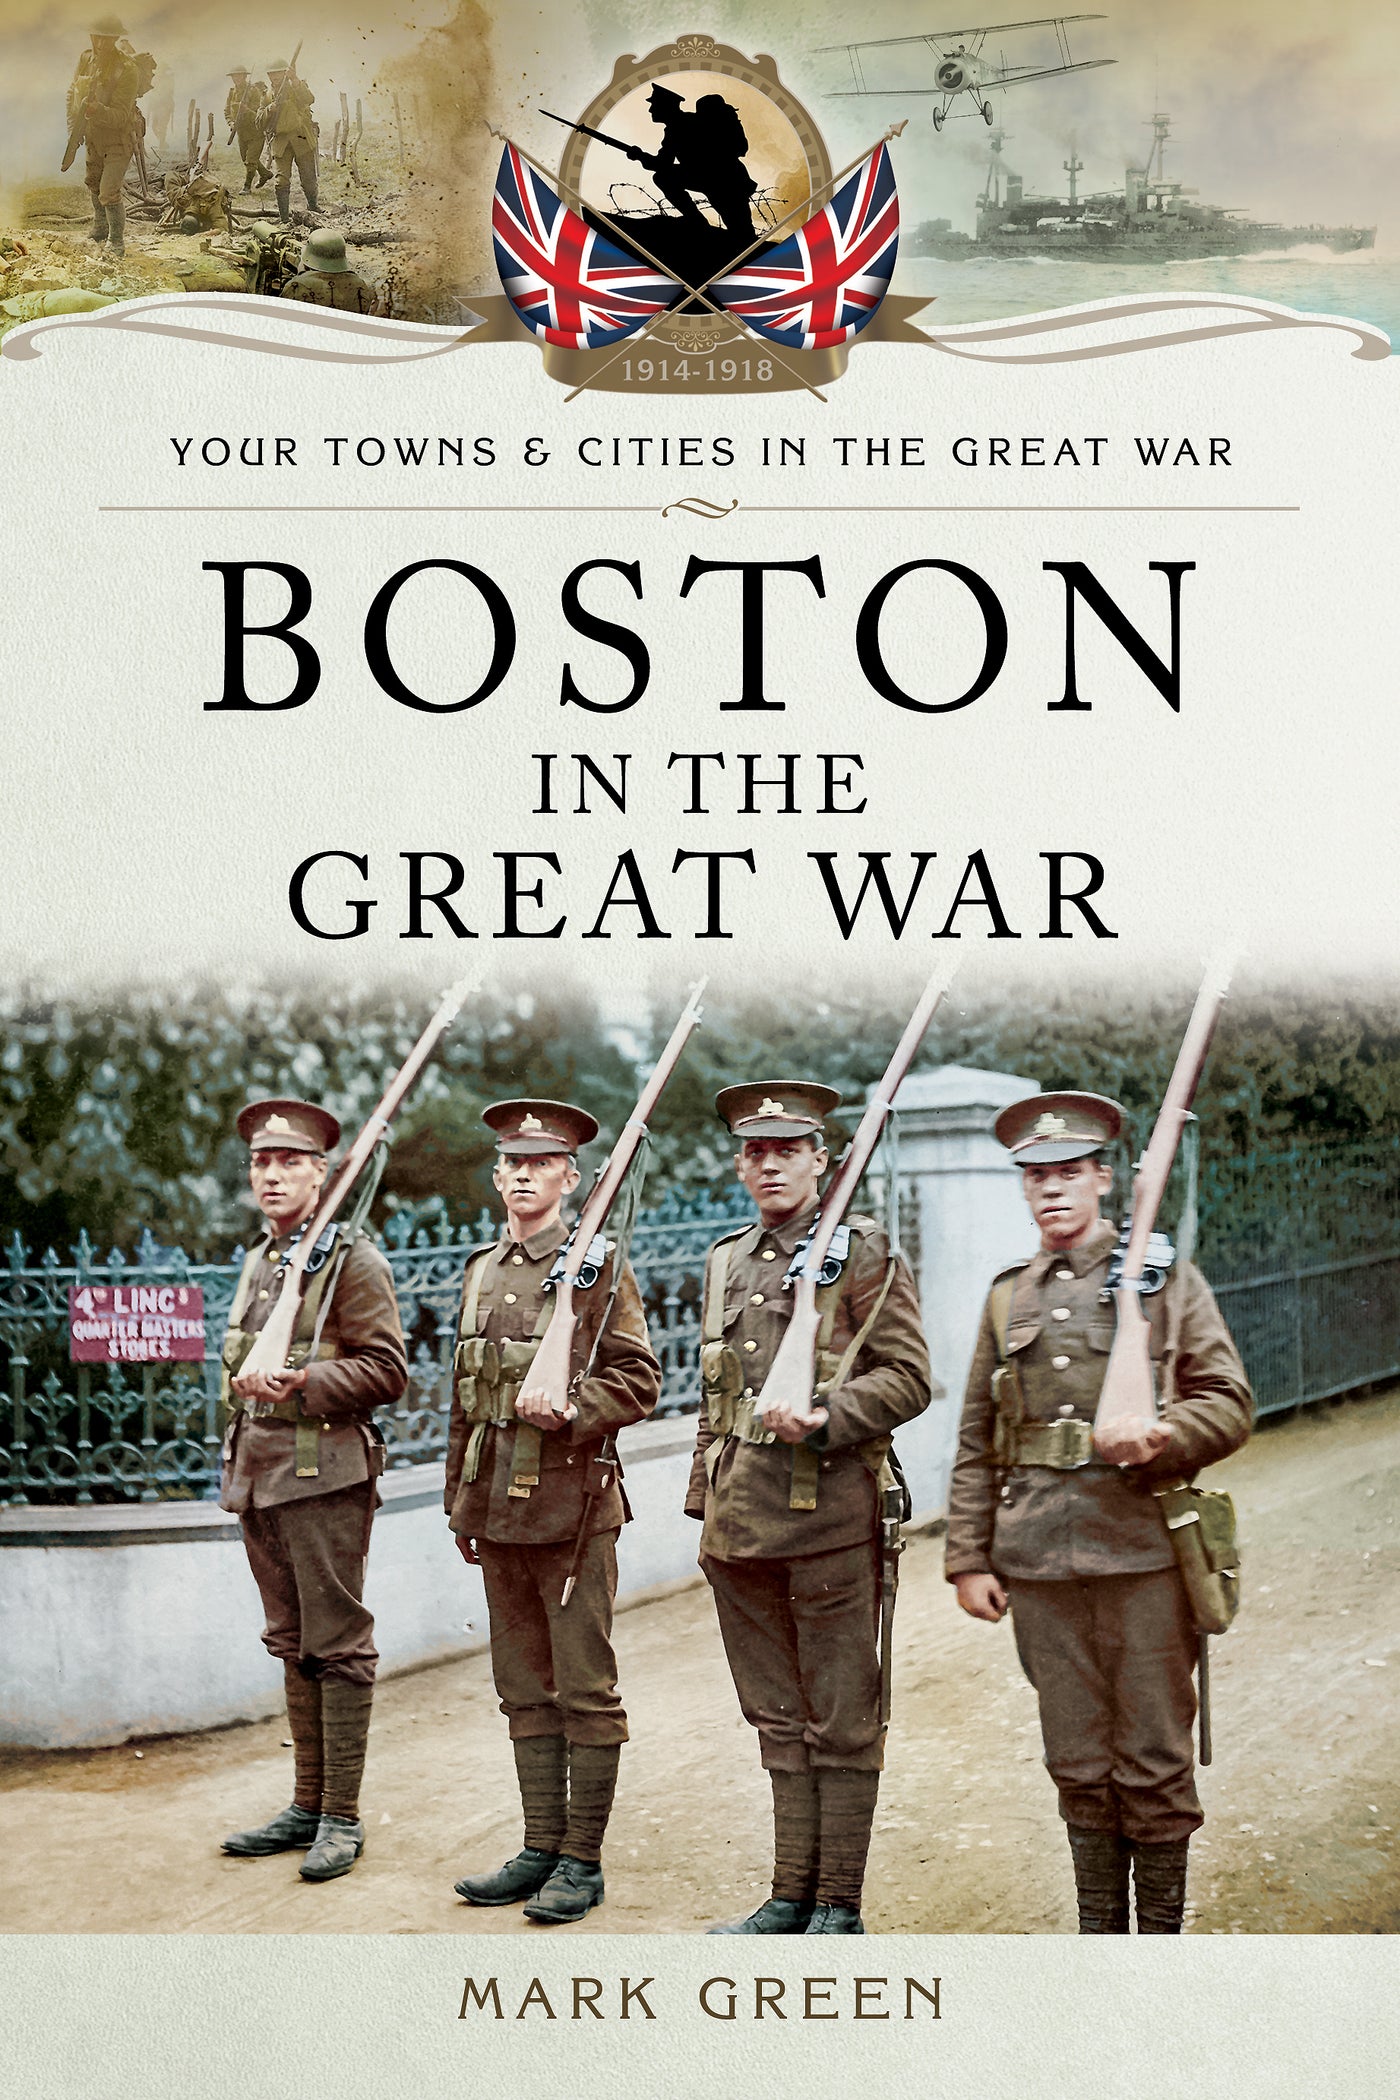 Boston (UK) in the Great War